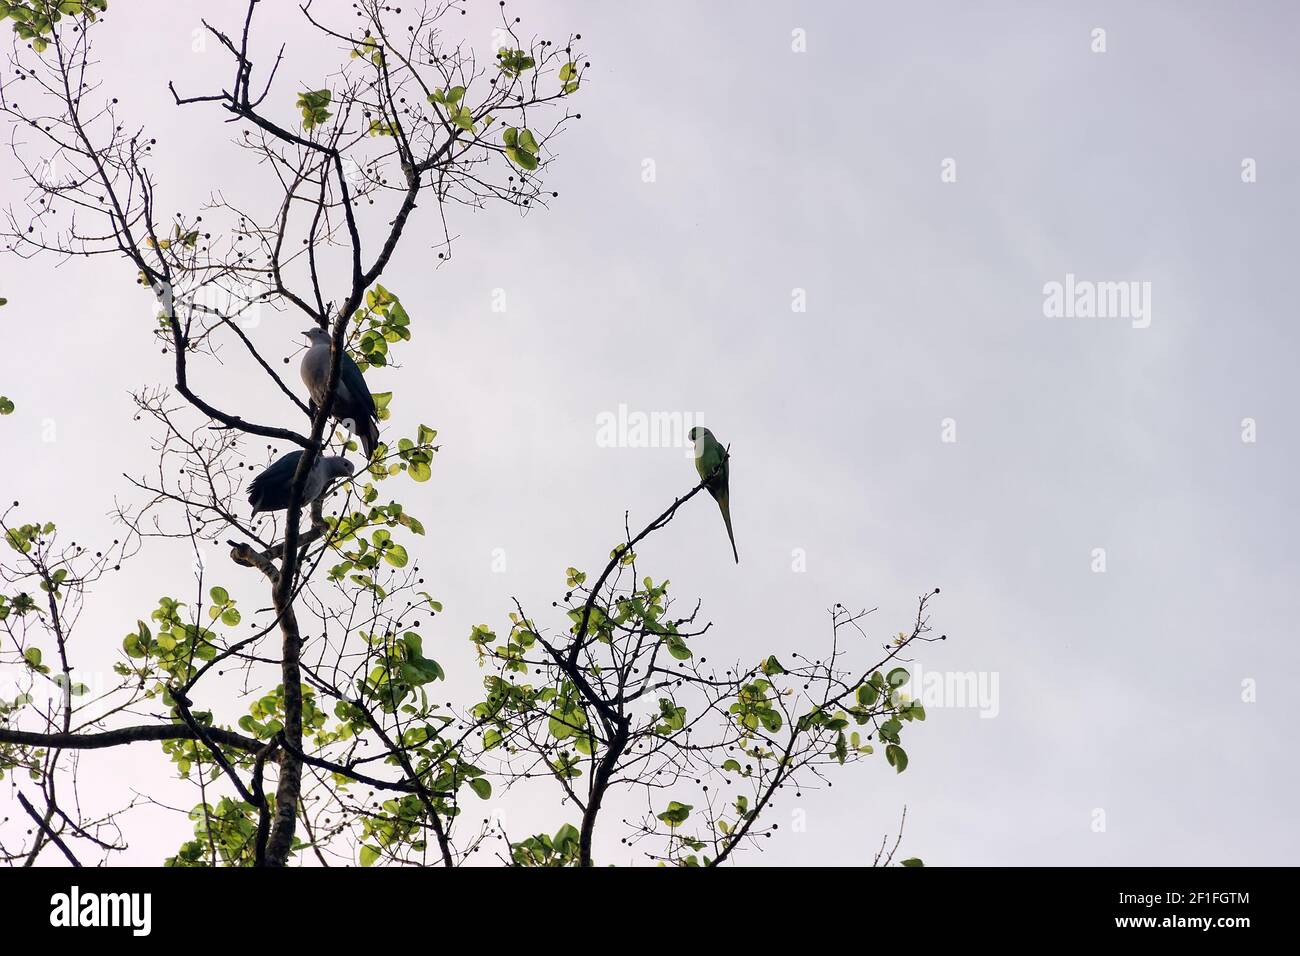 2 Green Imperial Pigeon (Ducula aenea pusilla) eats fruit on trees like a fruit-eating bird, Kramer's parrot is sitting next to its. Sri Lanka wintert Stock Photo